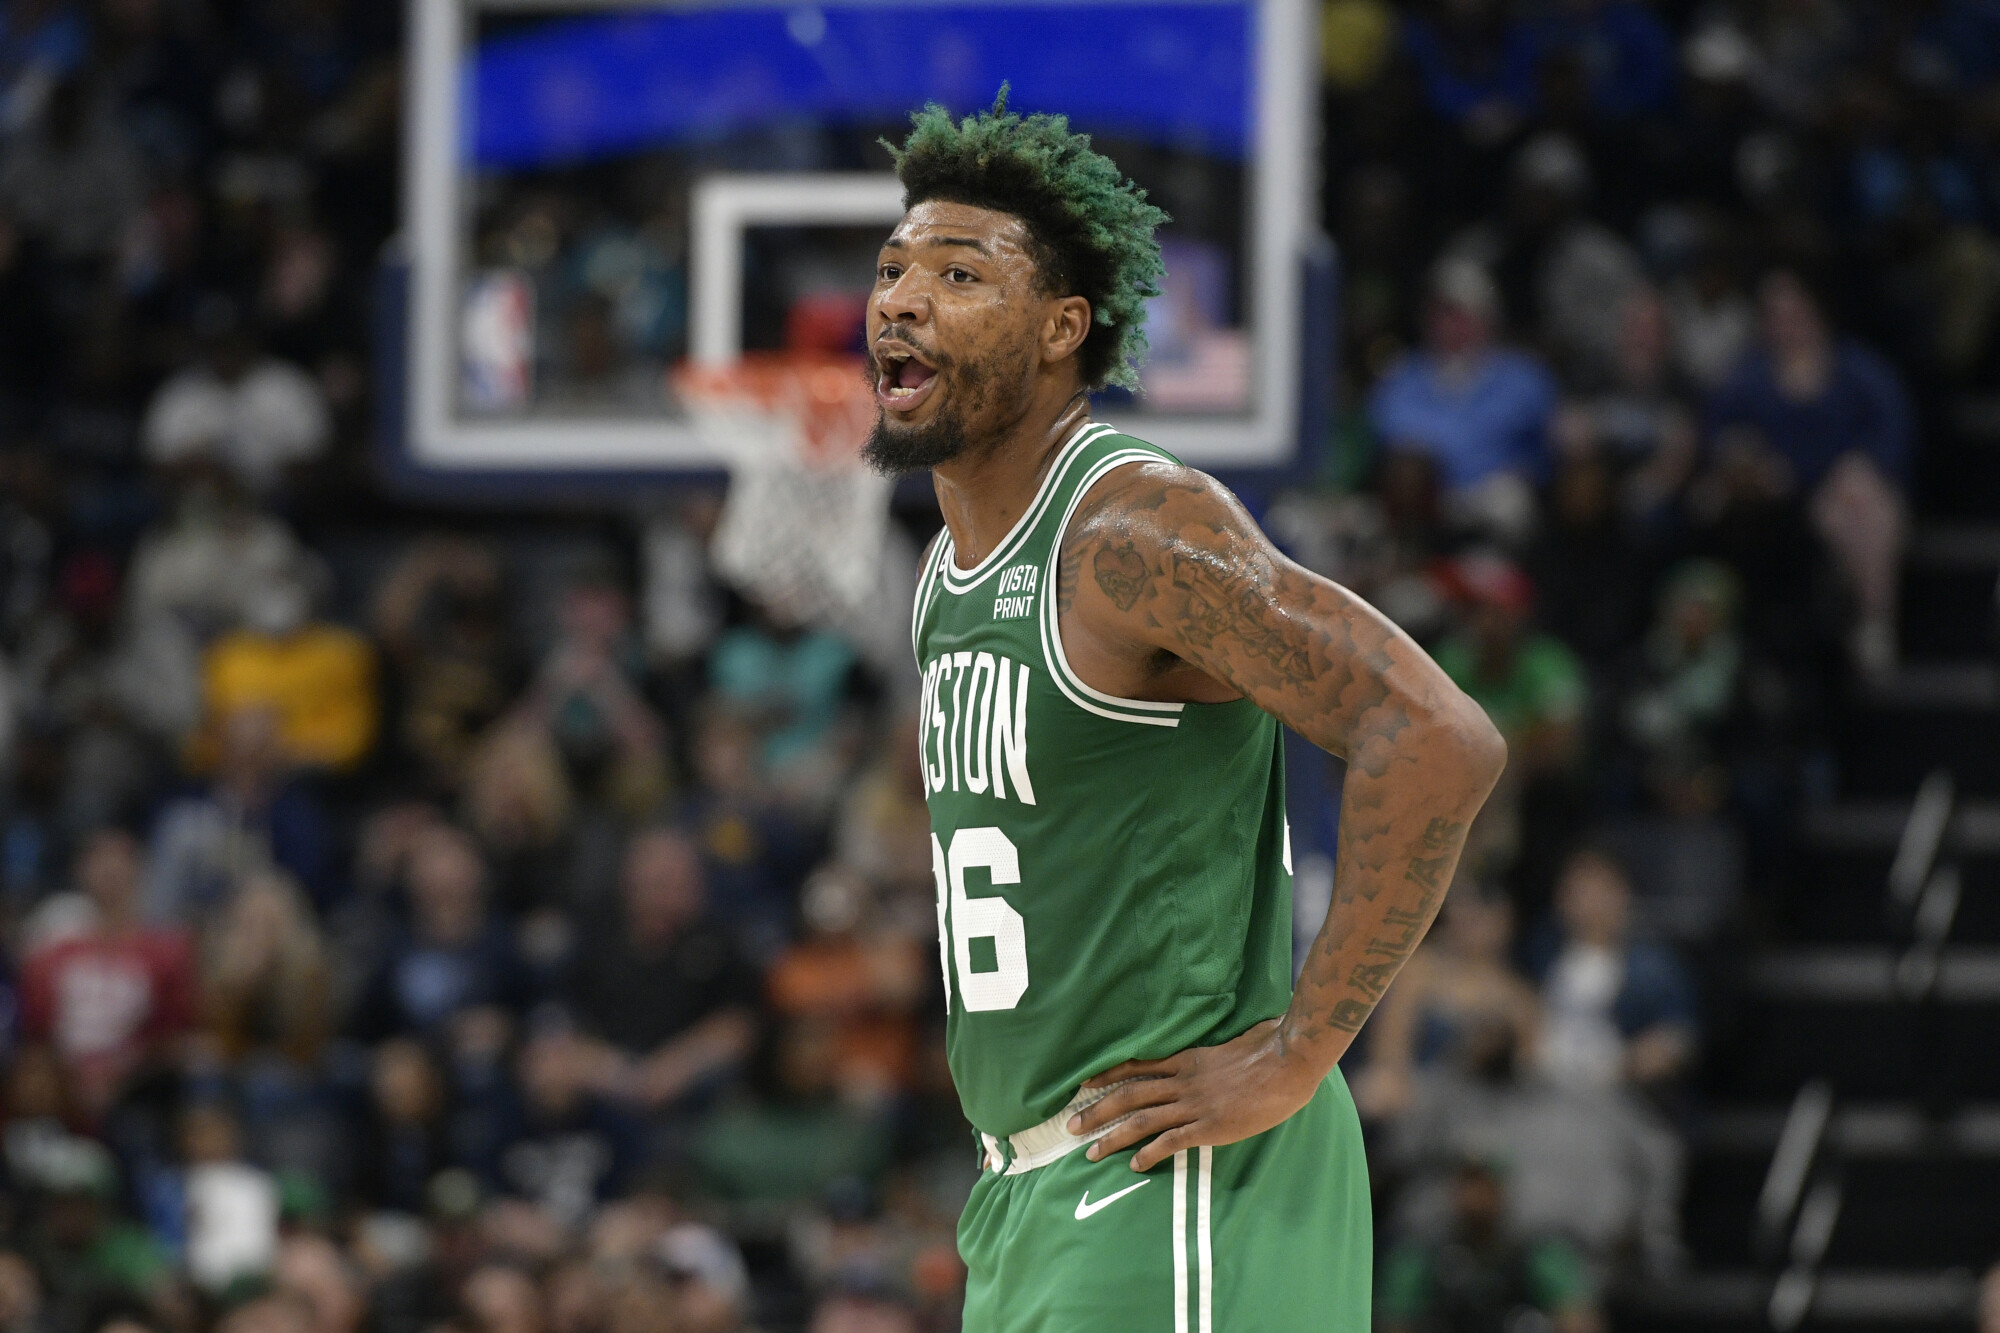 Celtics on NBC Sports Boston on X: MARCUS SMART TRIPLE &